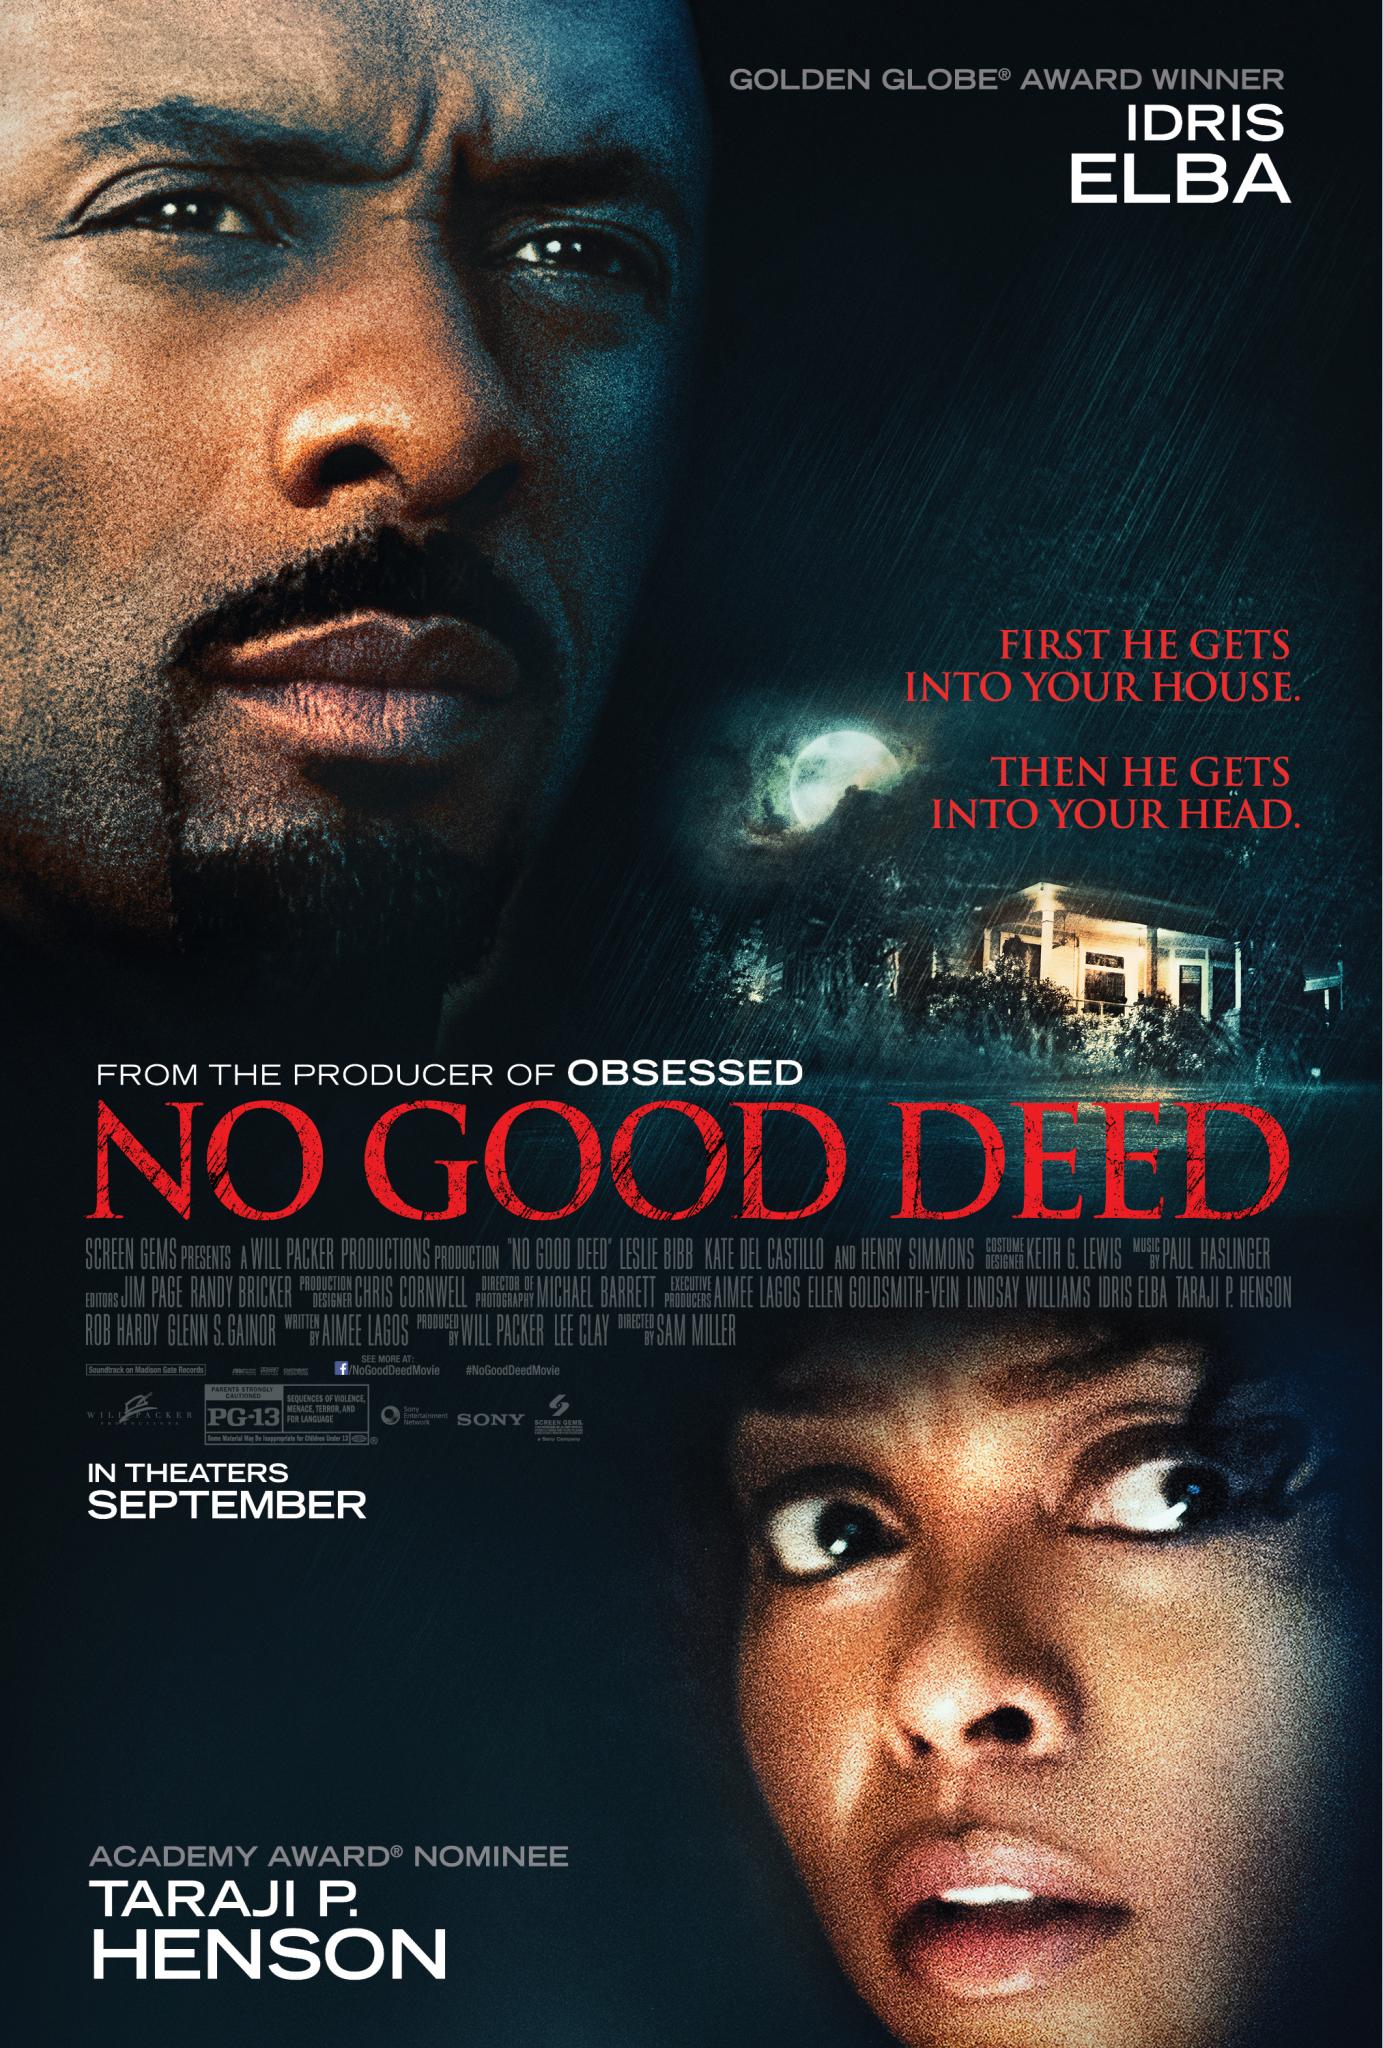 See Idris Elba and Taraji P. Henson in New 'No Good Deed' Poster
